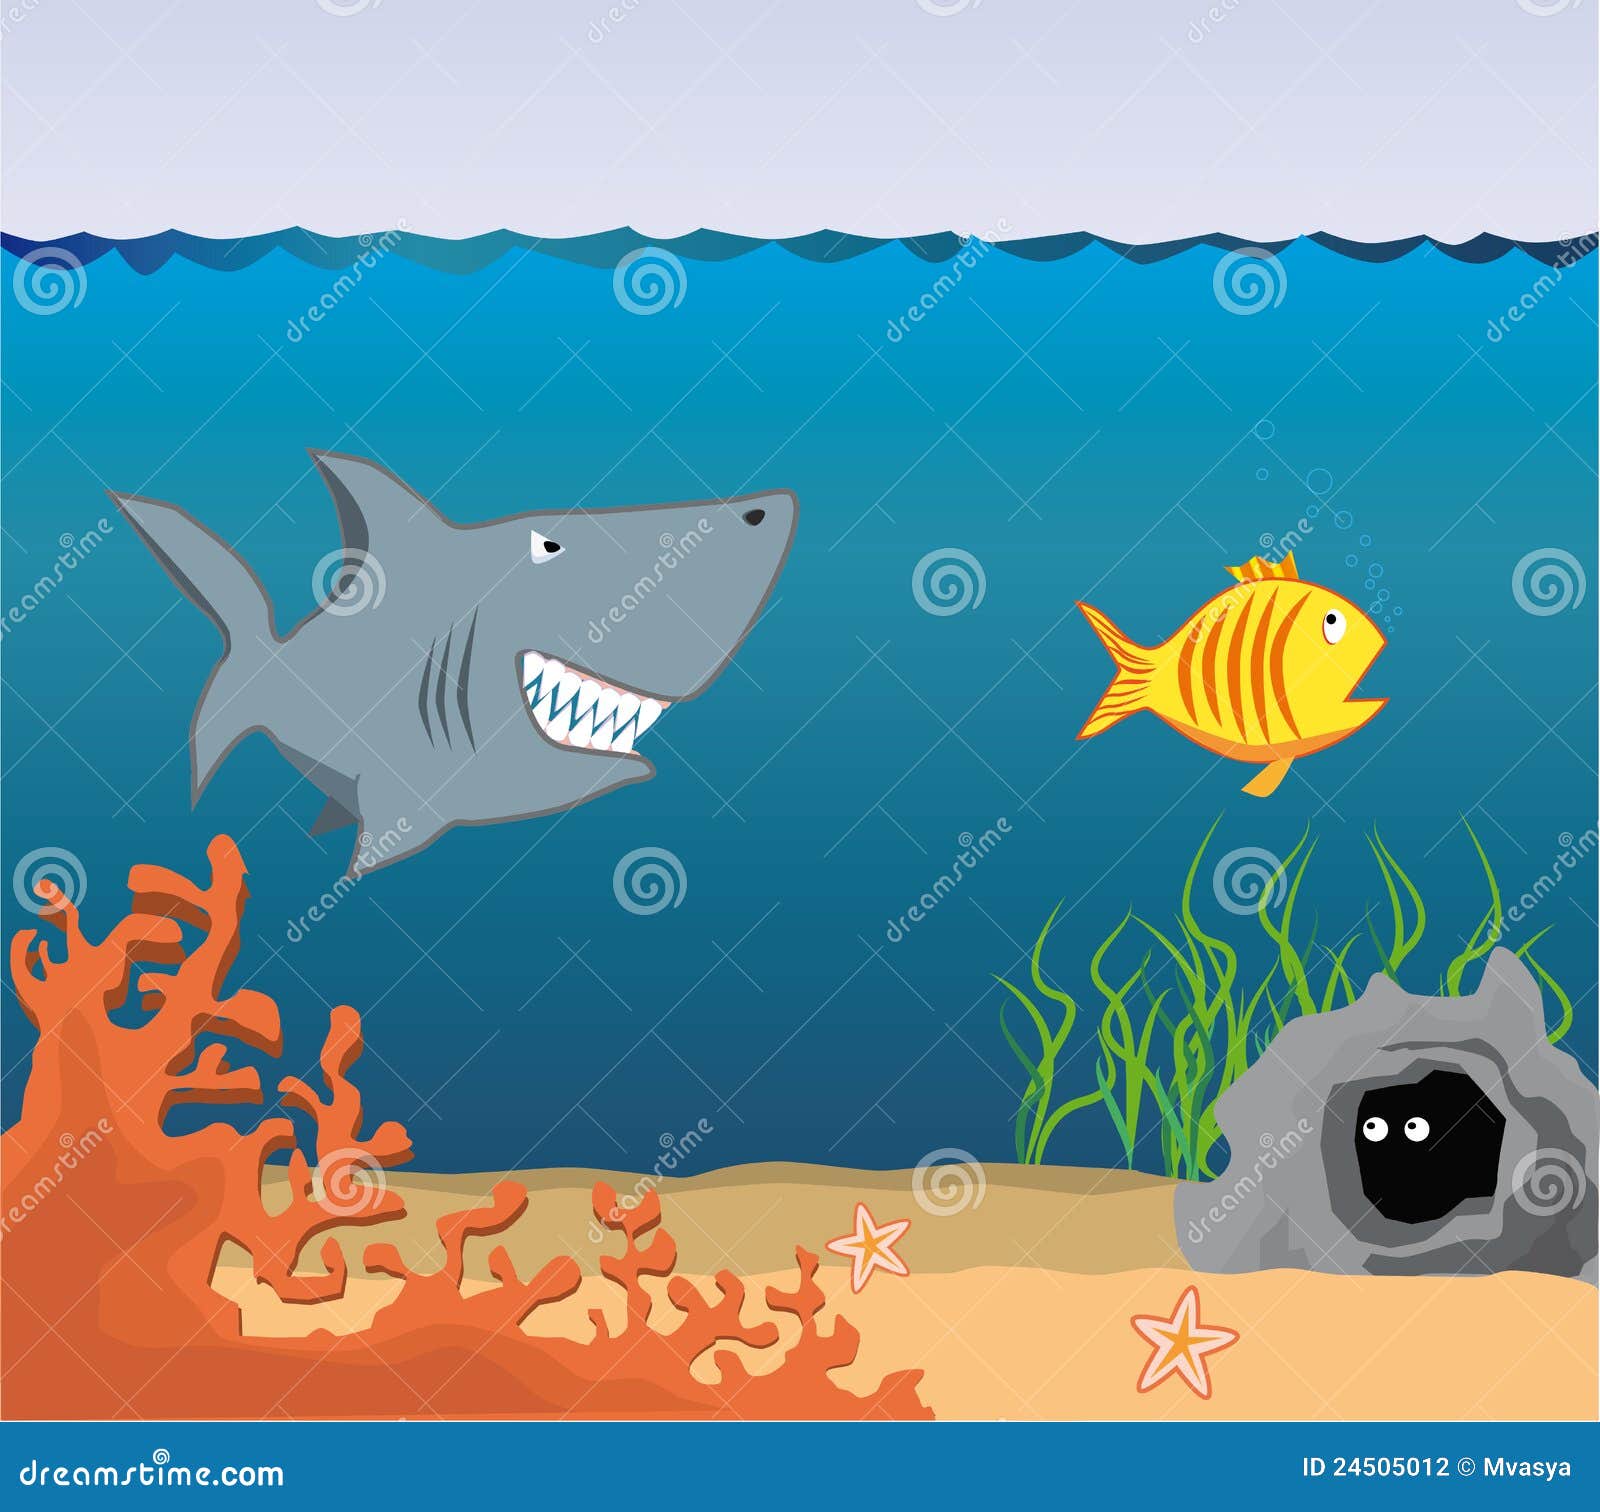 Cartoon Underwater World. Stock Photography - Image: 24505012